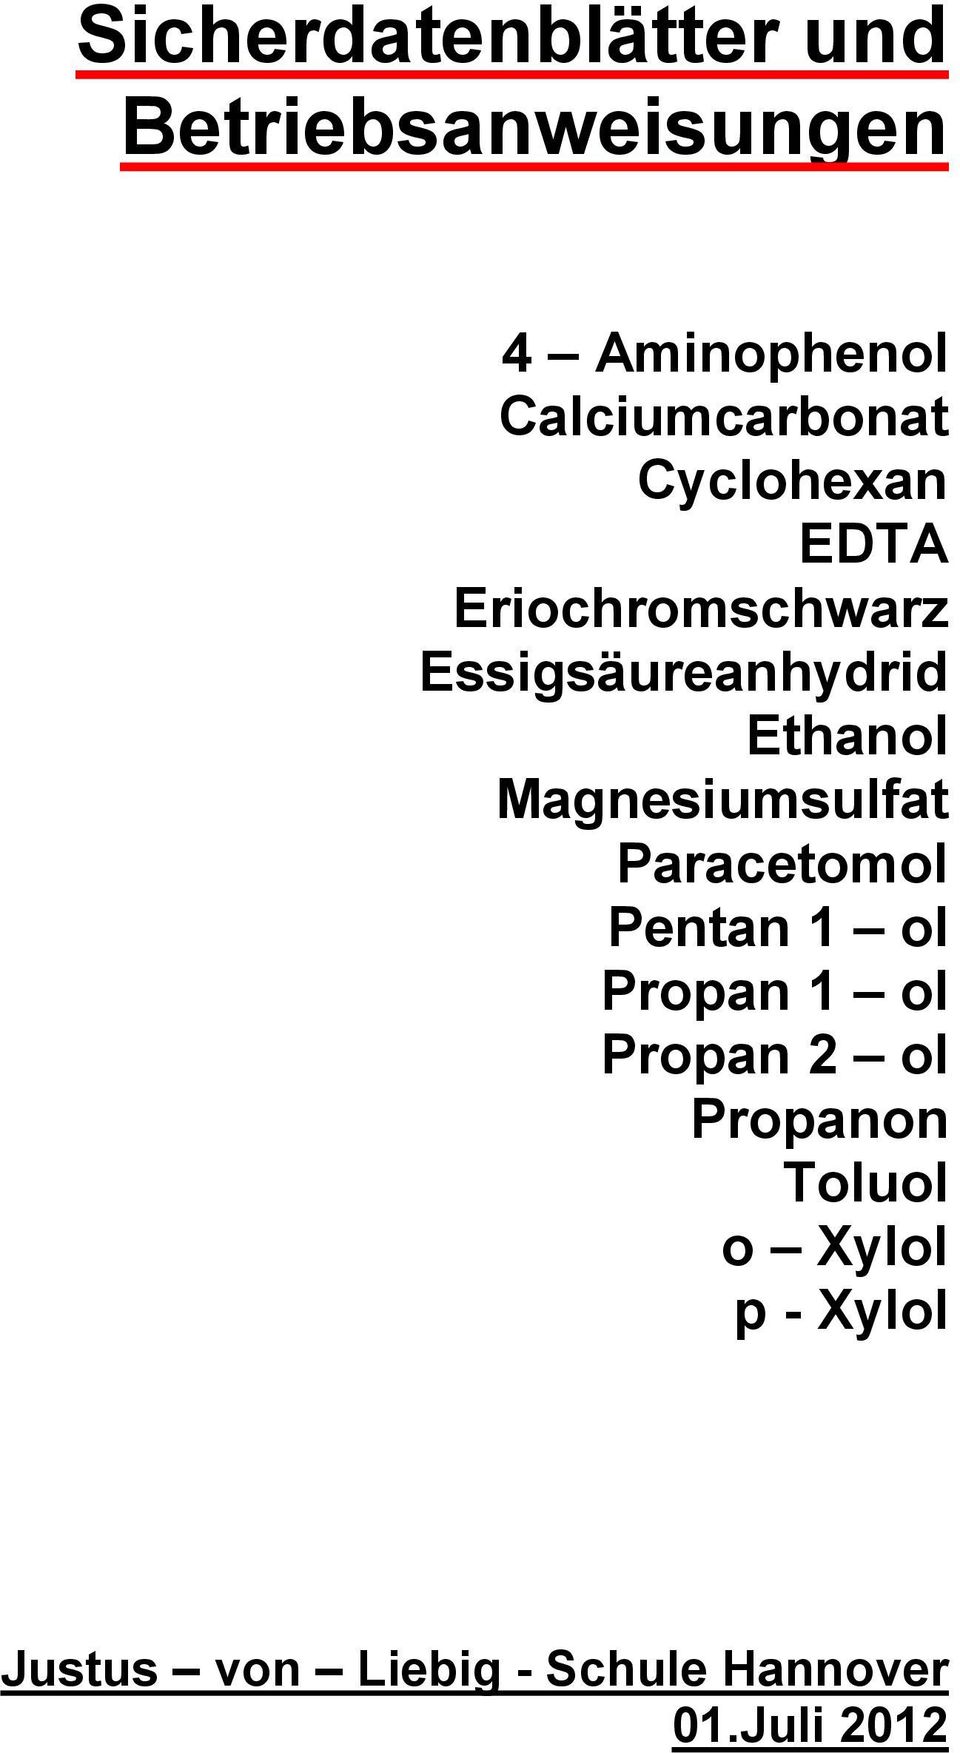 Ethanol Magnesiumsulfat Paracetomol Pentan 1 ol Propan 1 ol Propan 2